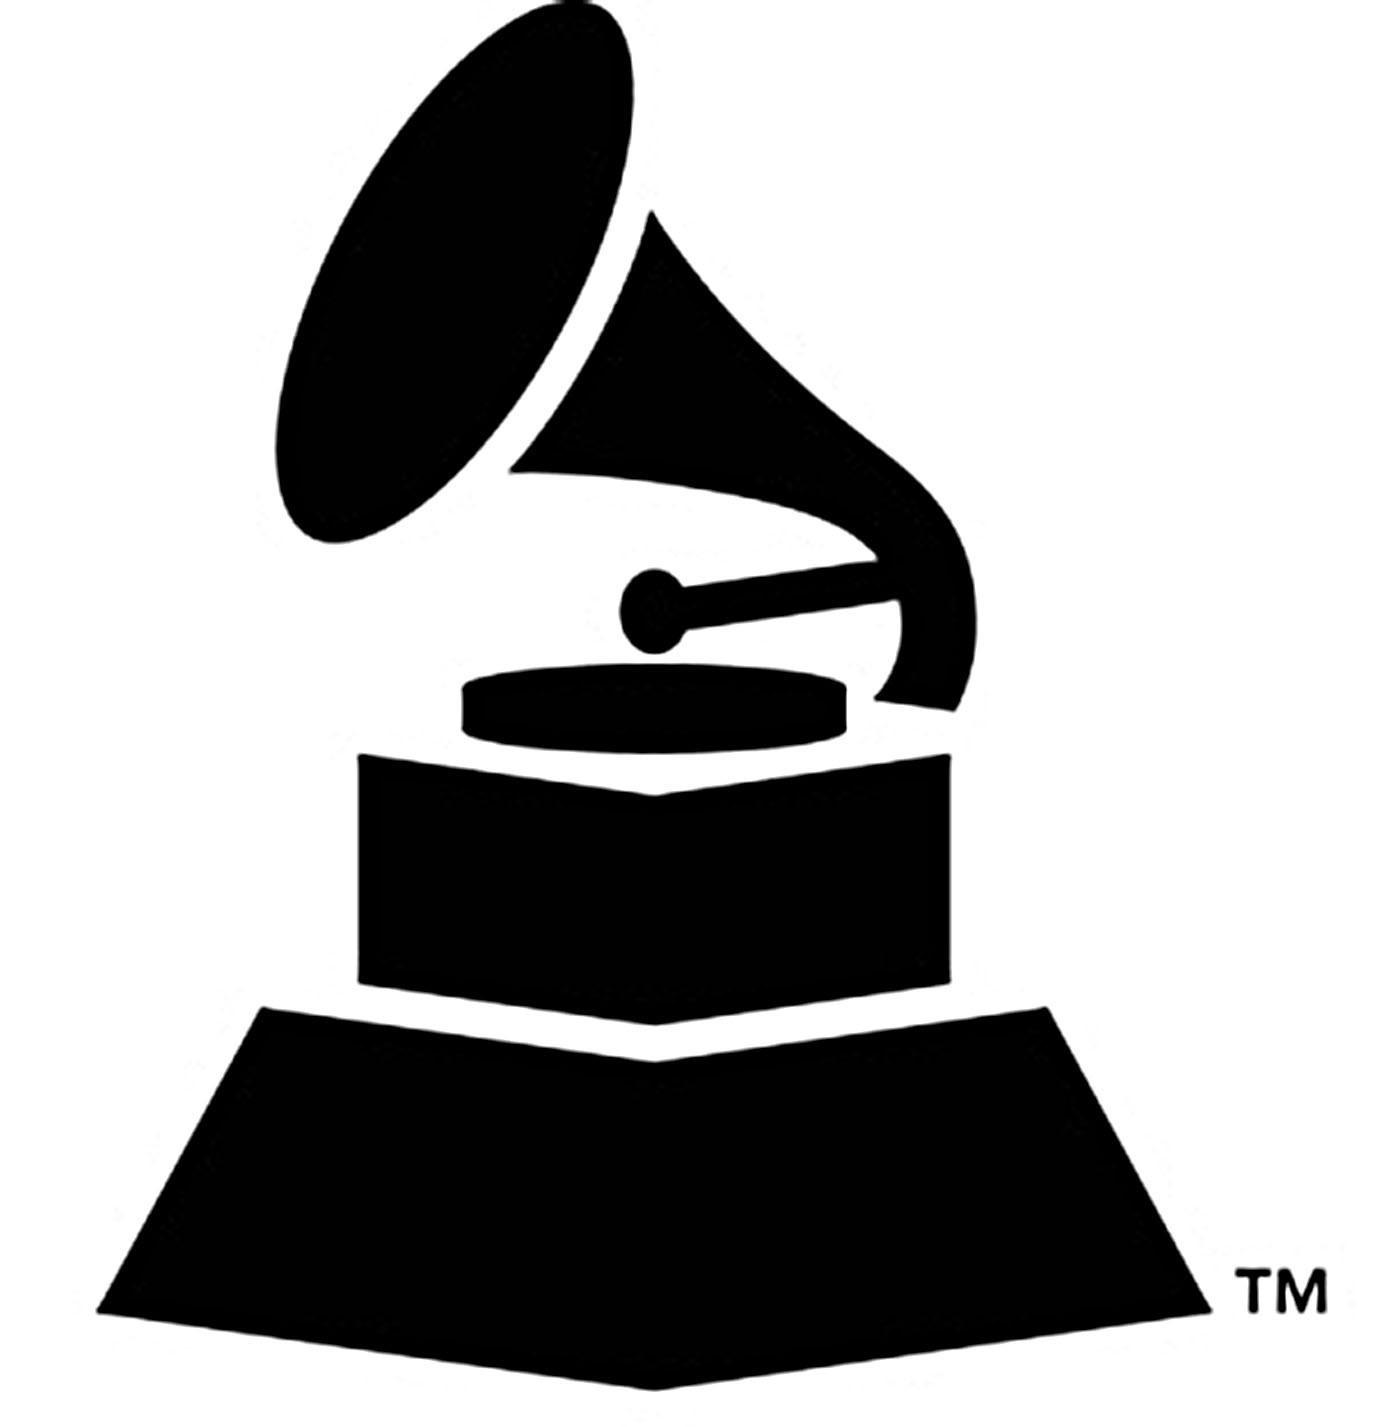 Grammy Logo - grammy awards logo | 6AM